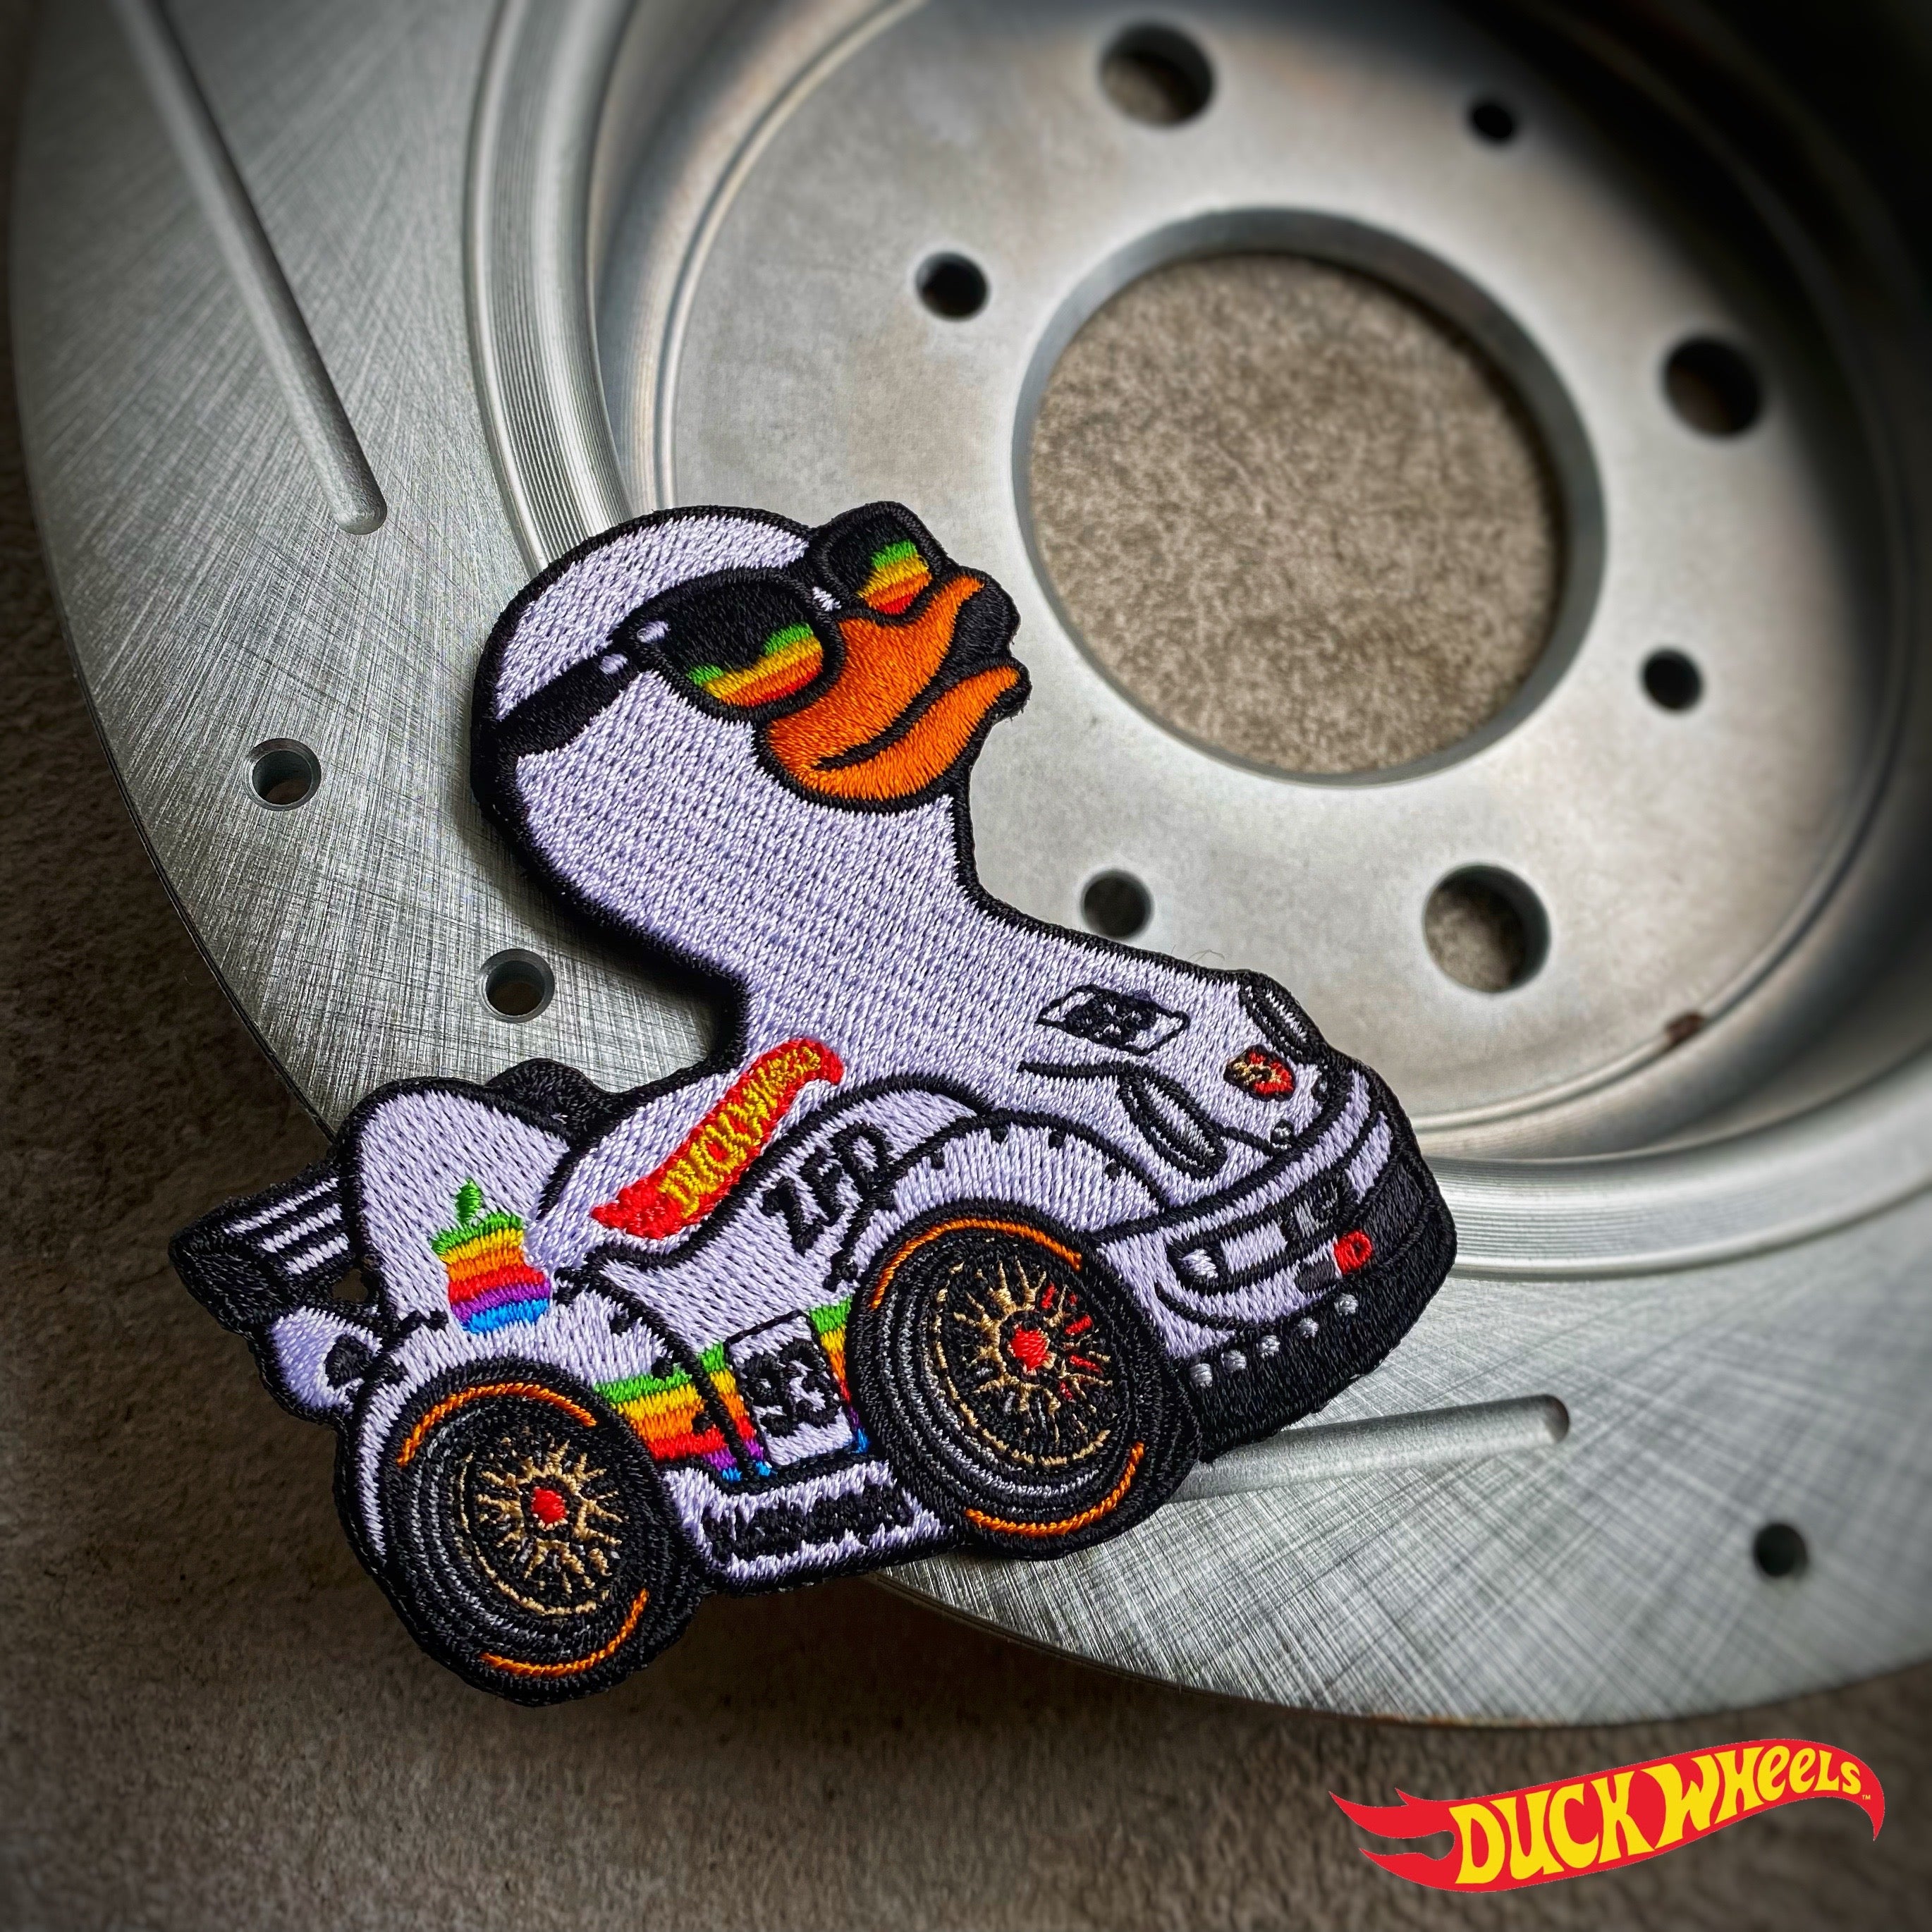 Zero Fucks Duck® Duck Wheels Bad Boys 964 Turbo Patch